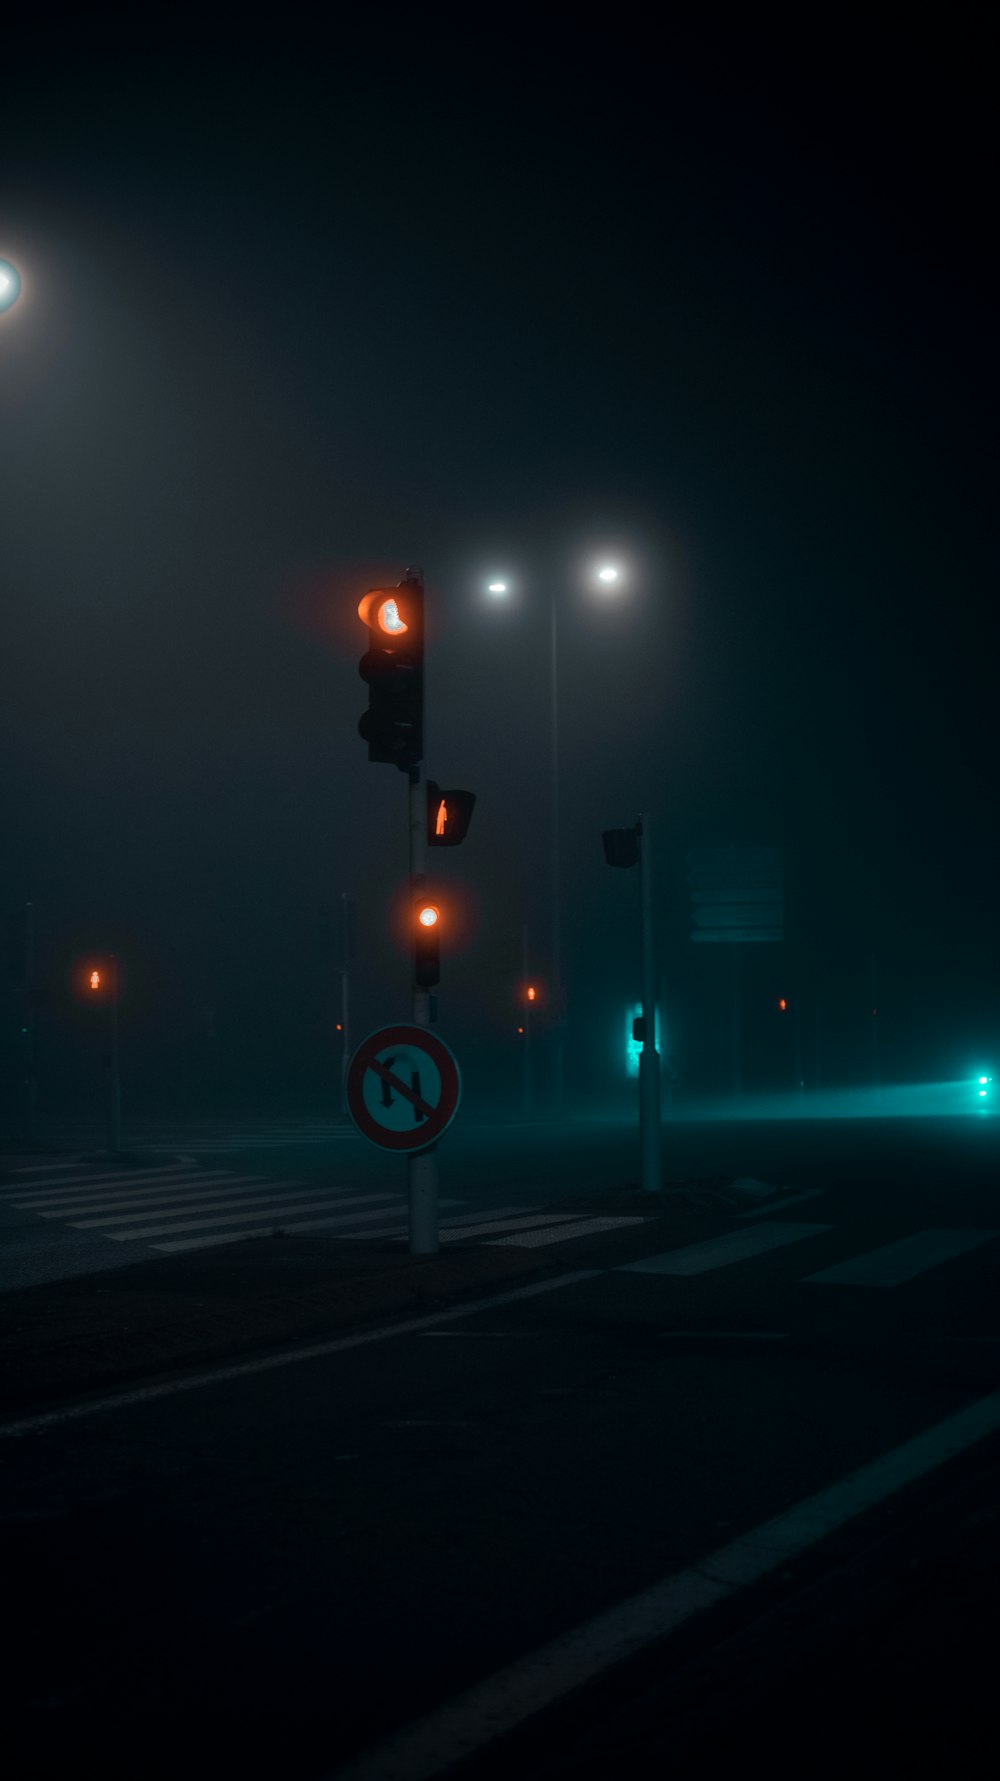 a stop light at night